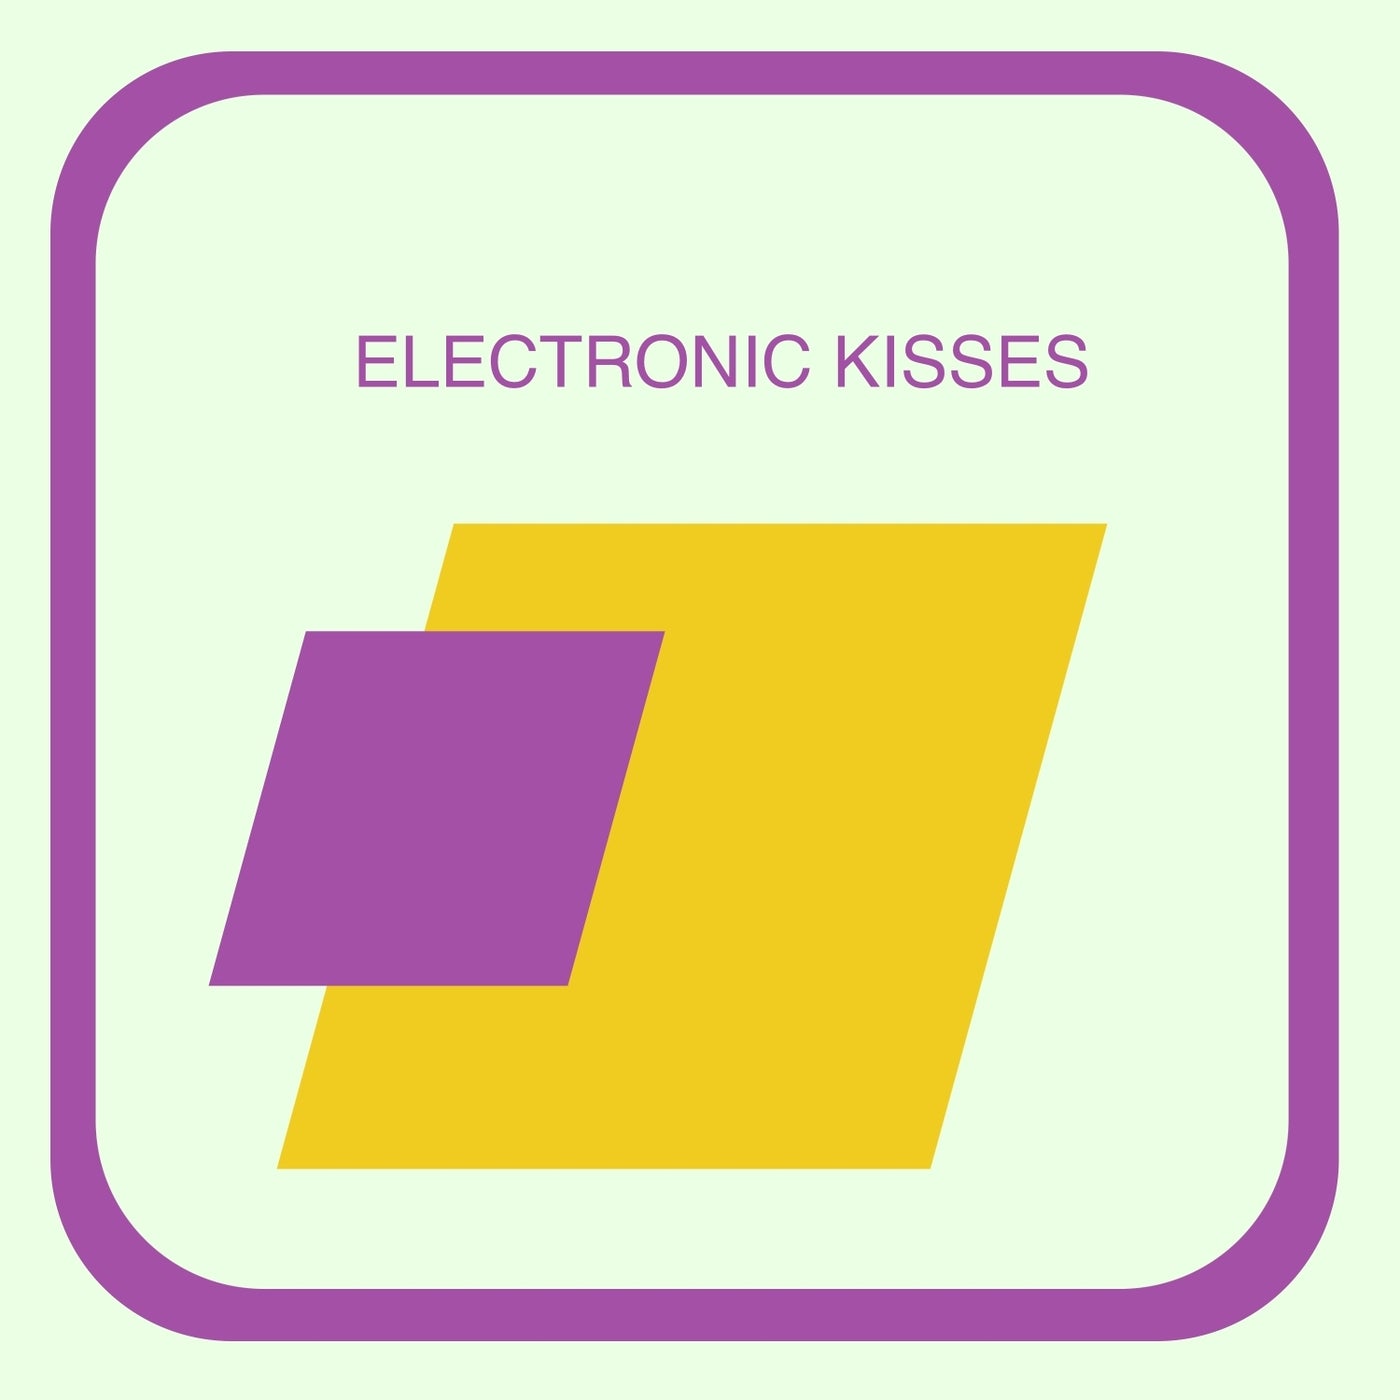 Electronic Kisses